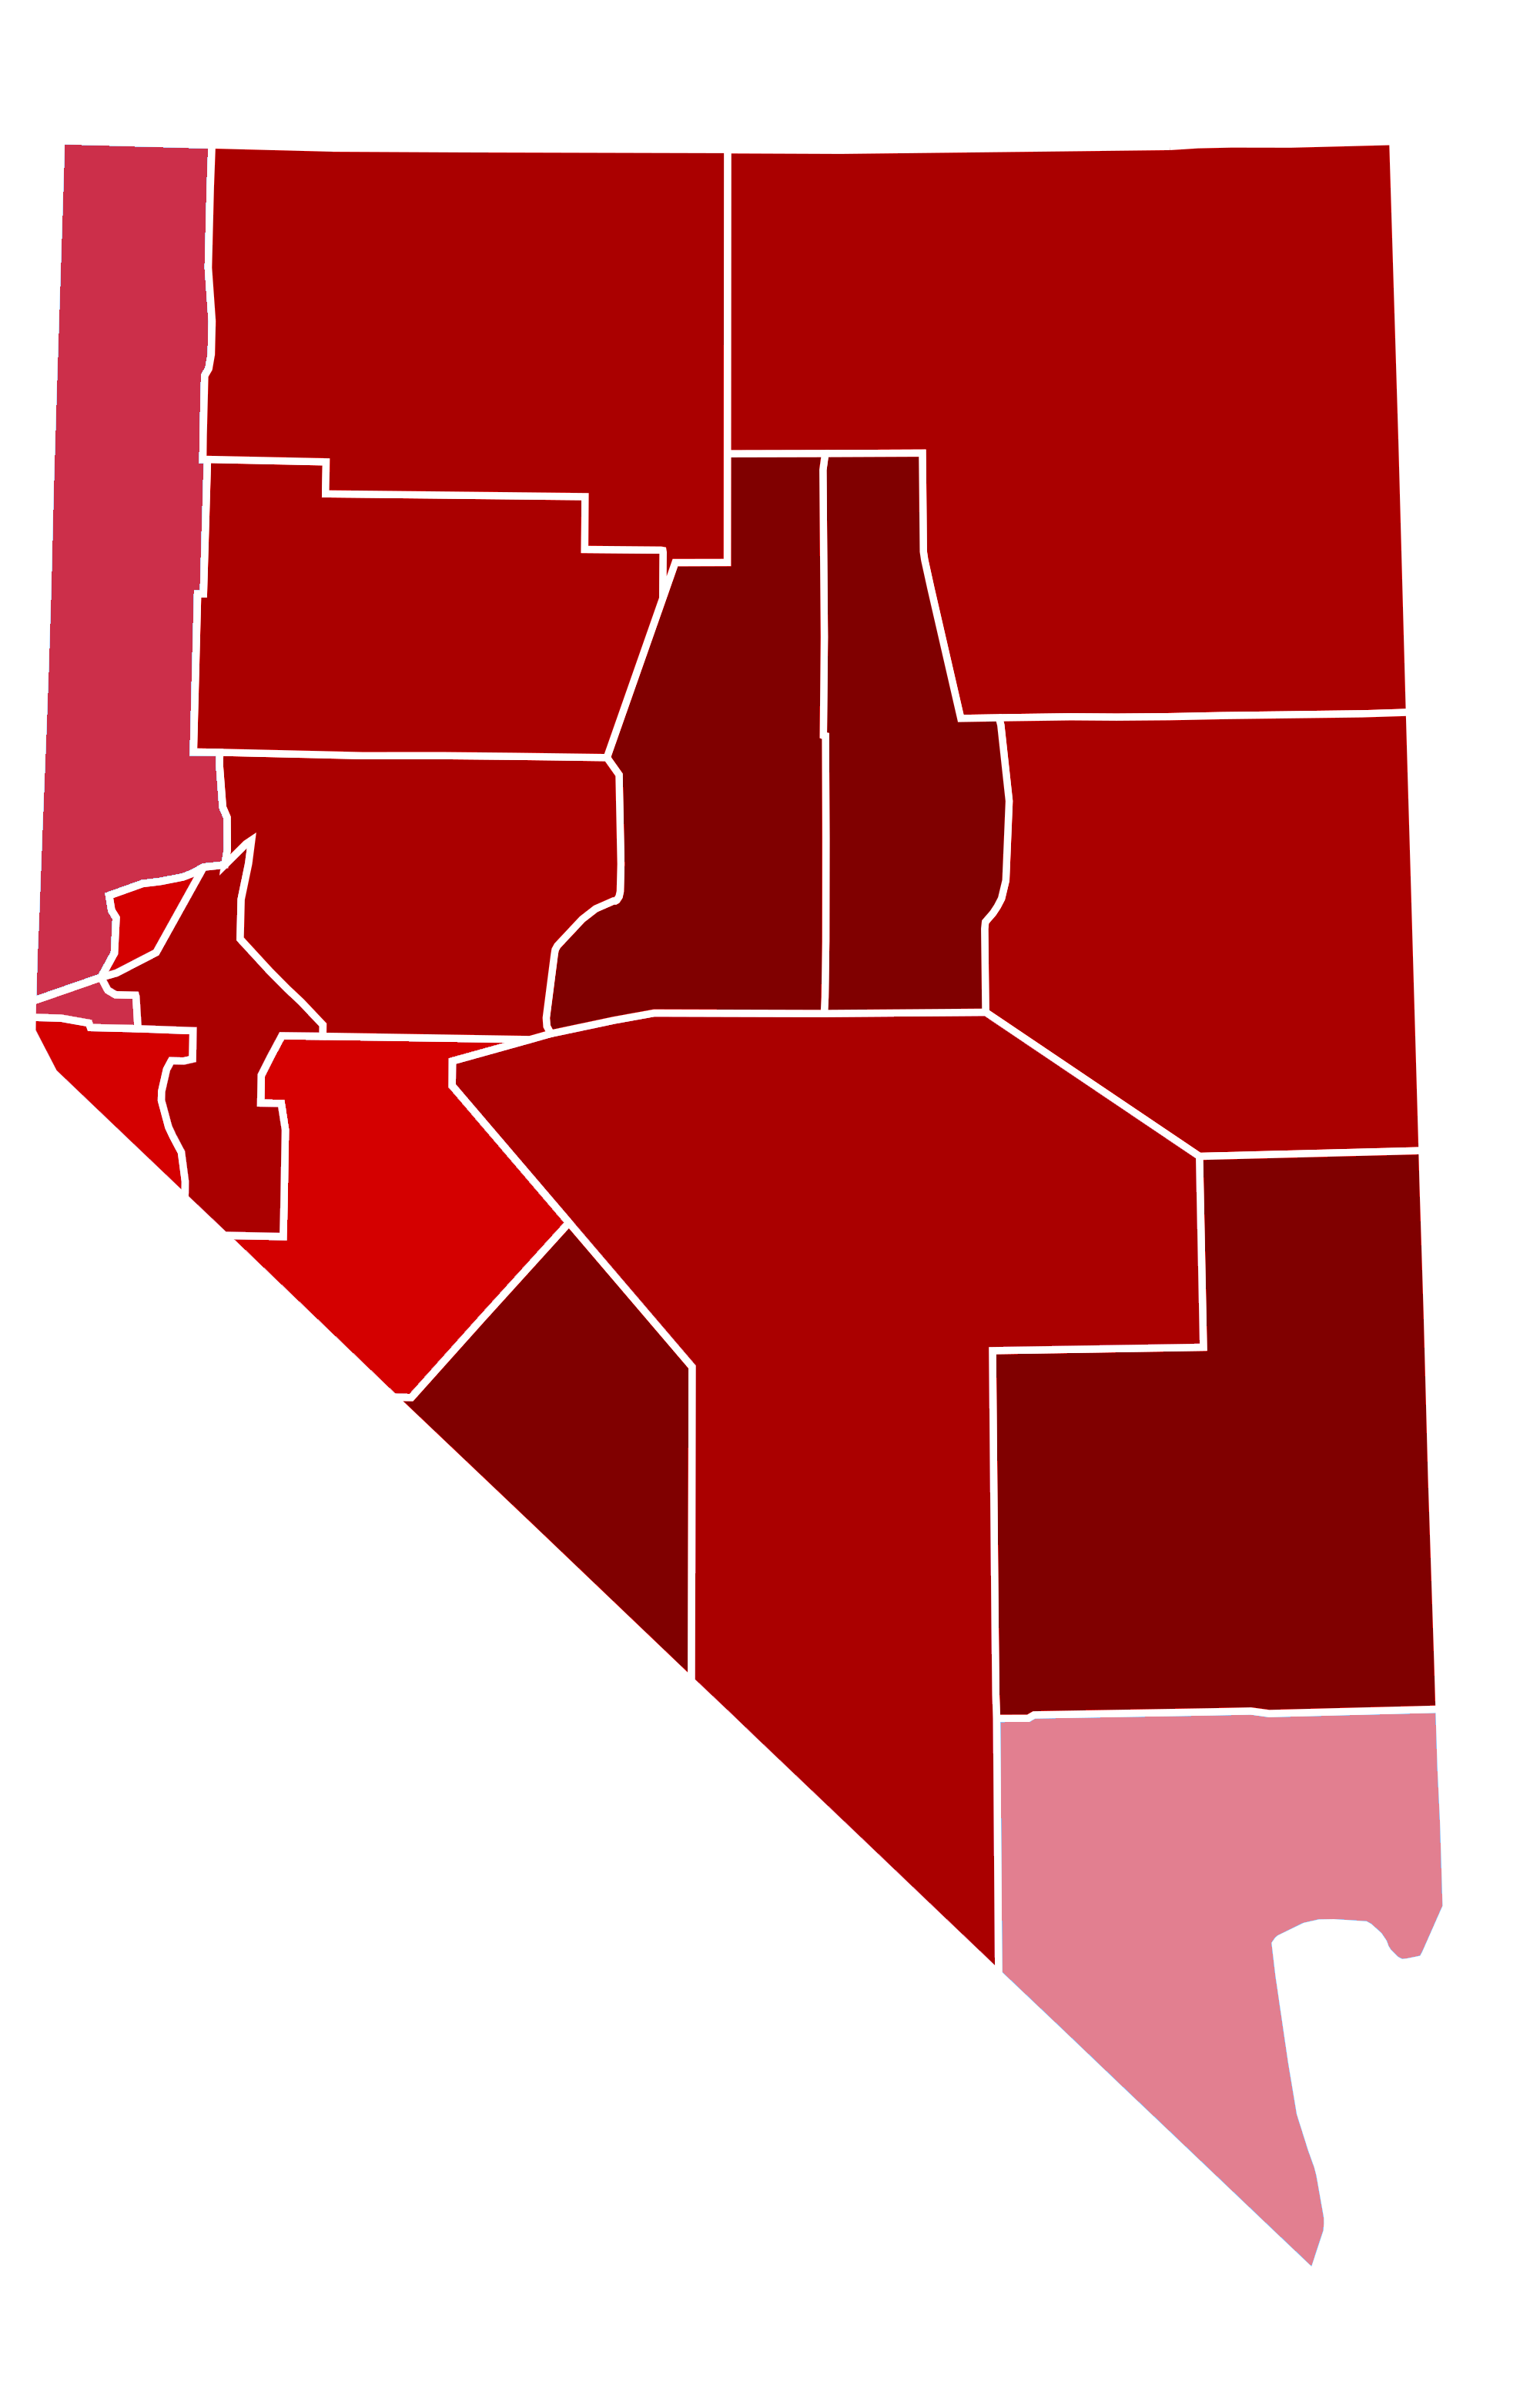 Nevada_Presidential_Election_Results_2016_Republican_Landslide_15.06%.png